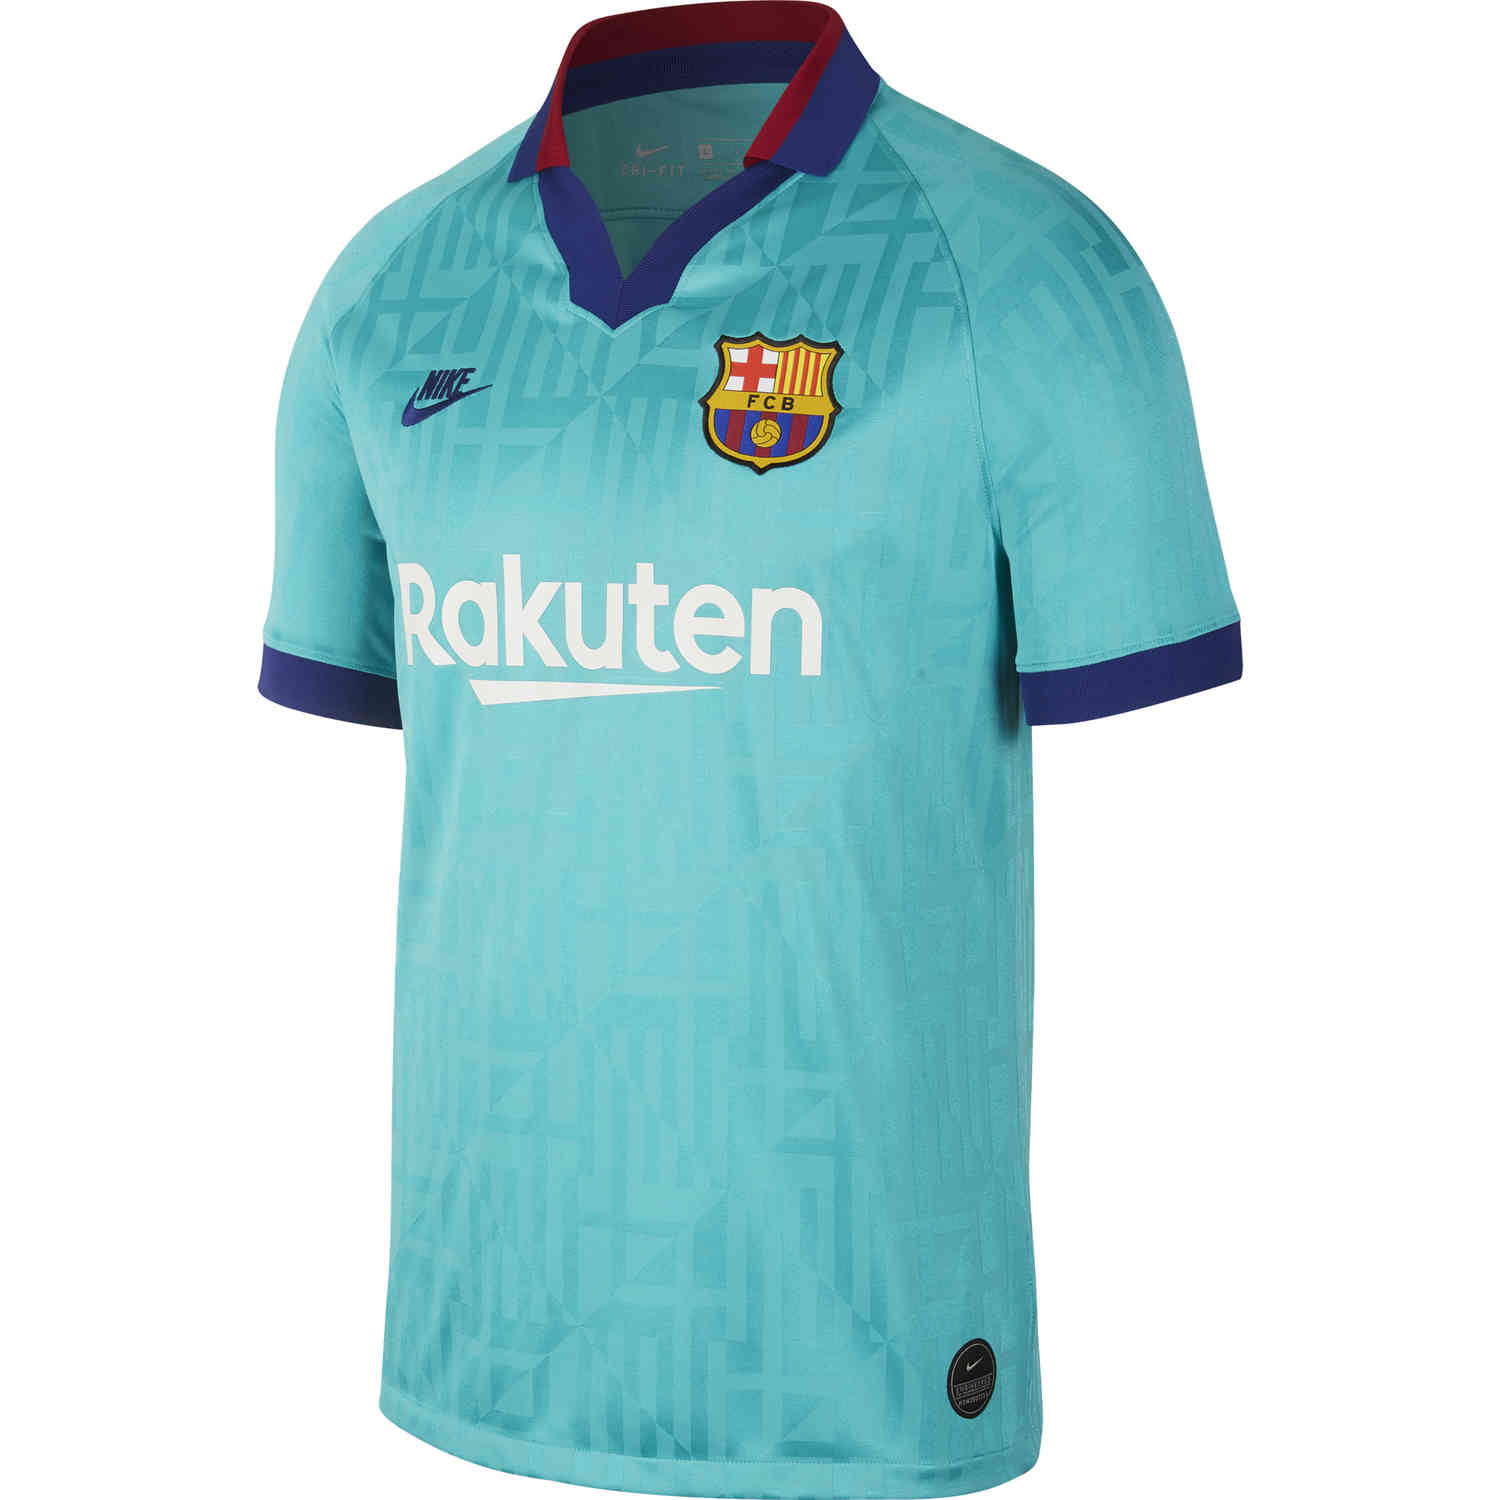 barcelona jersey image